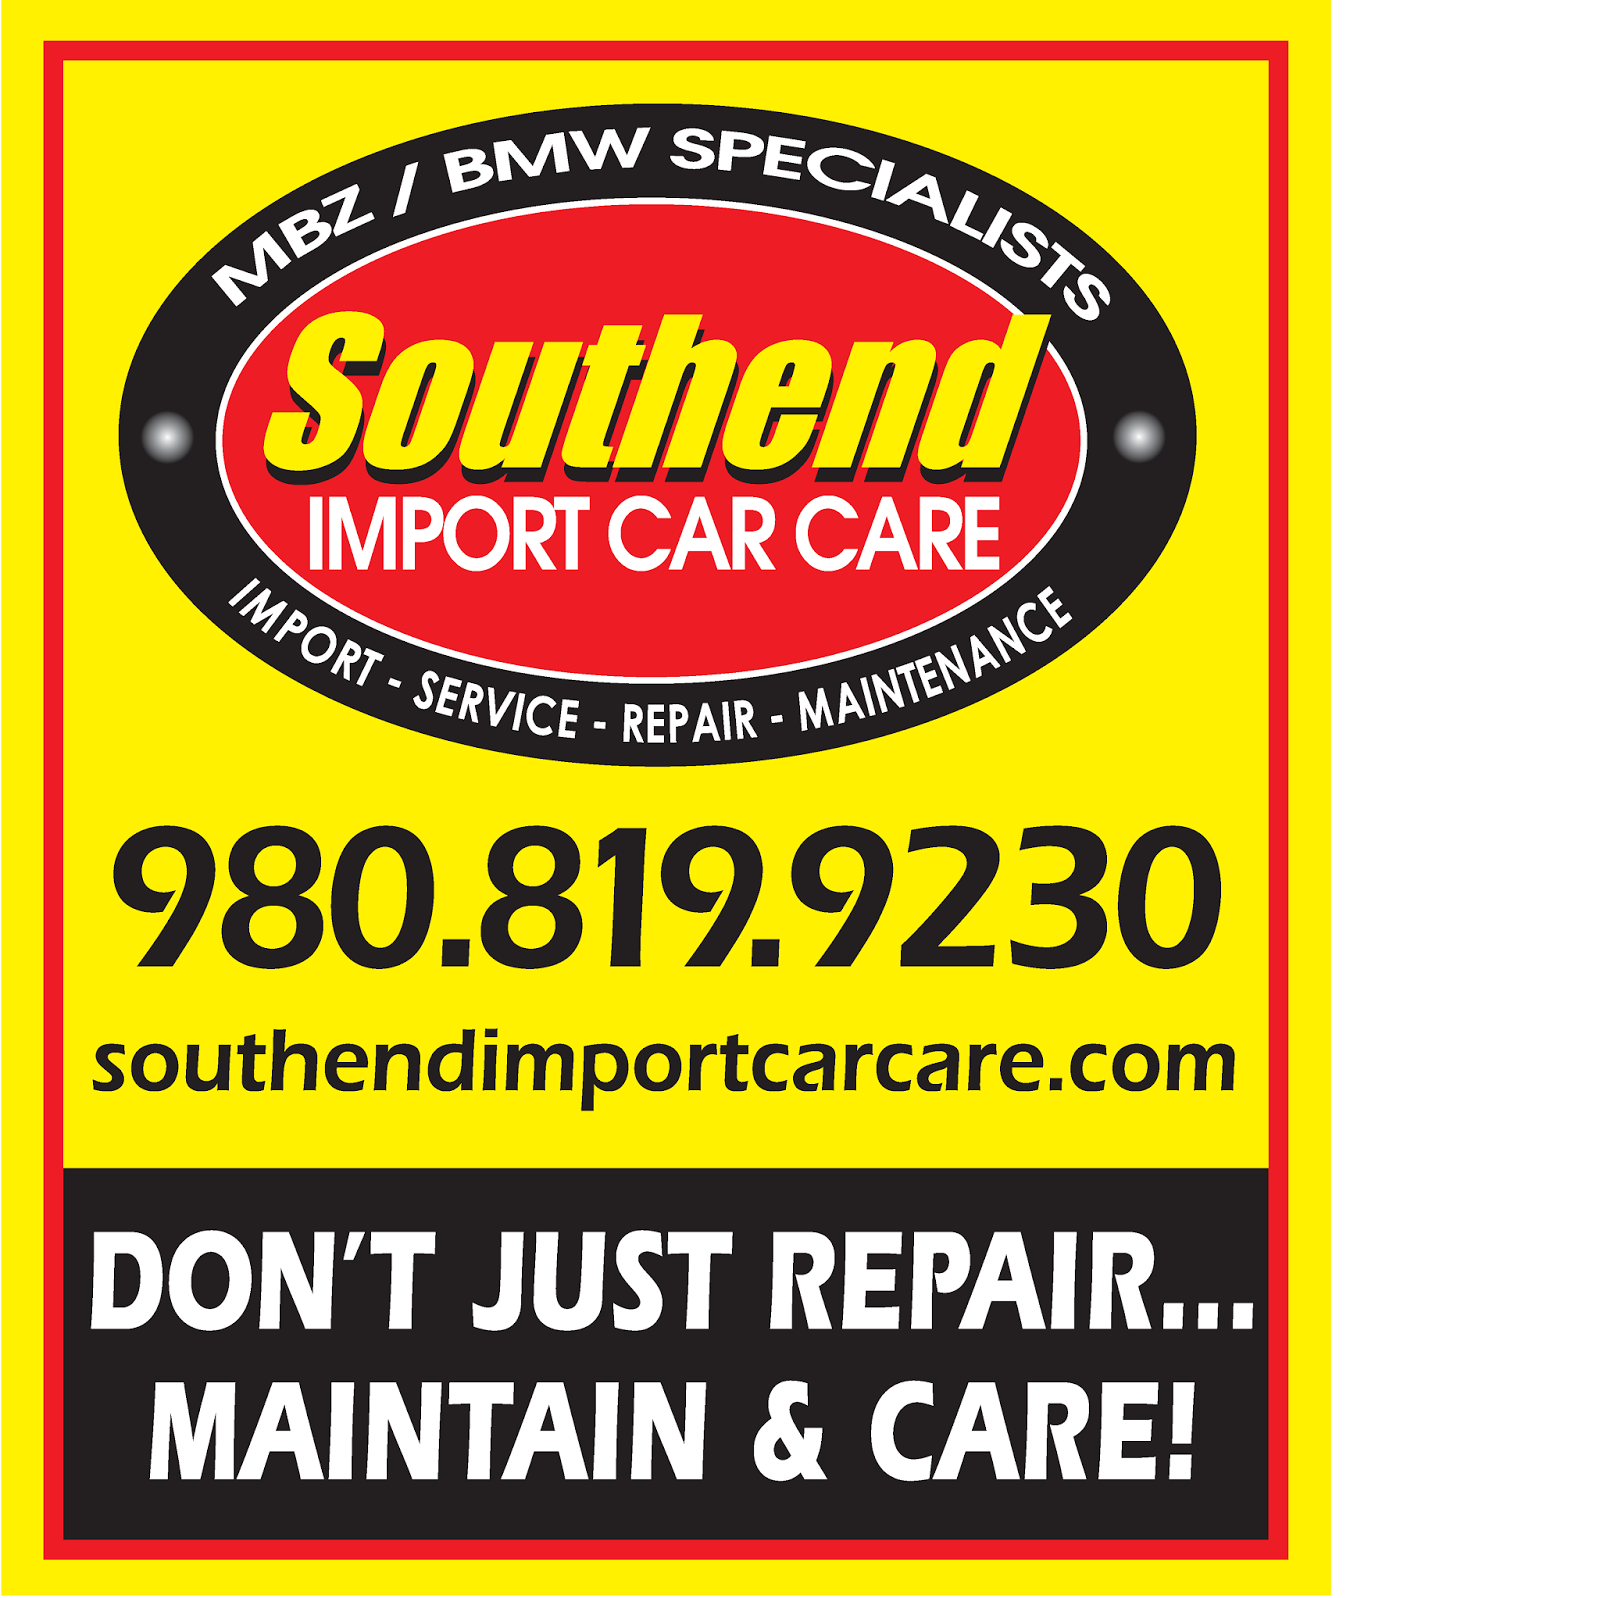 Southend Import Car Care